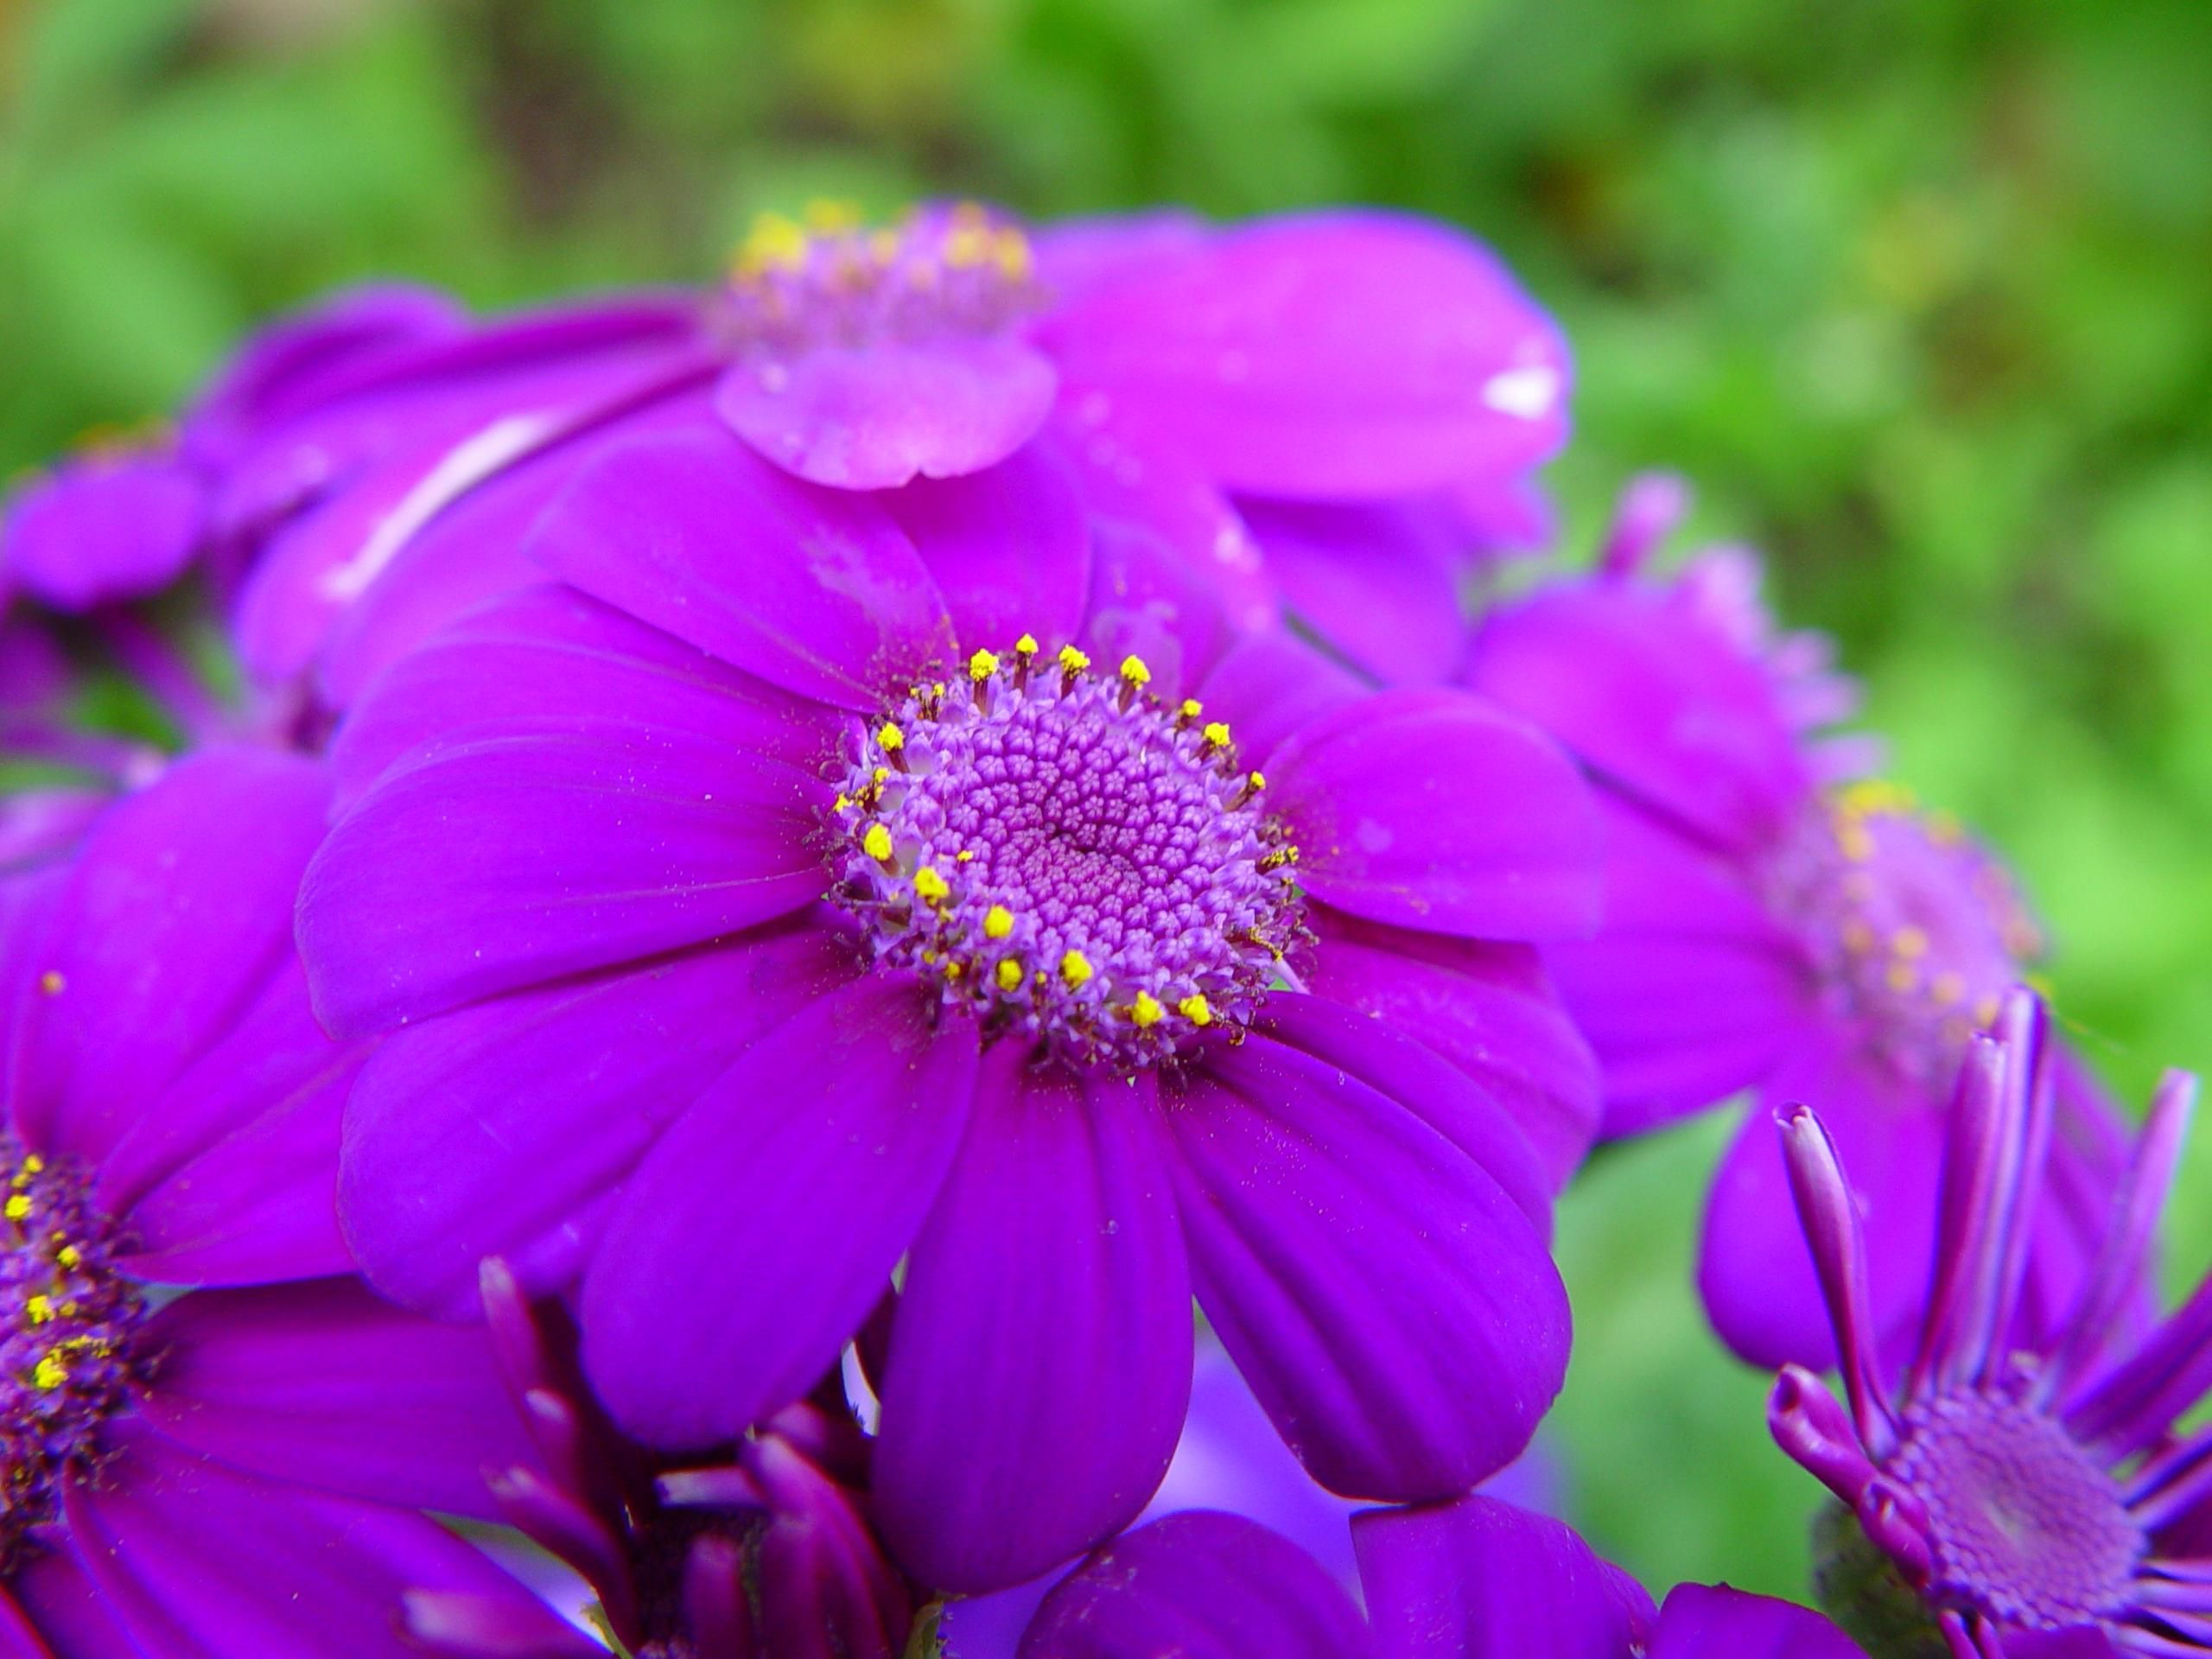 File:Bright purple flowers.jpg - Wikimedia Commons